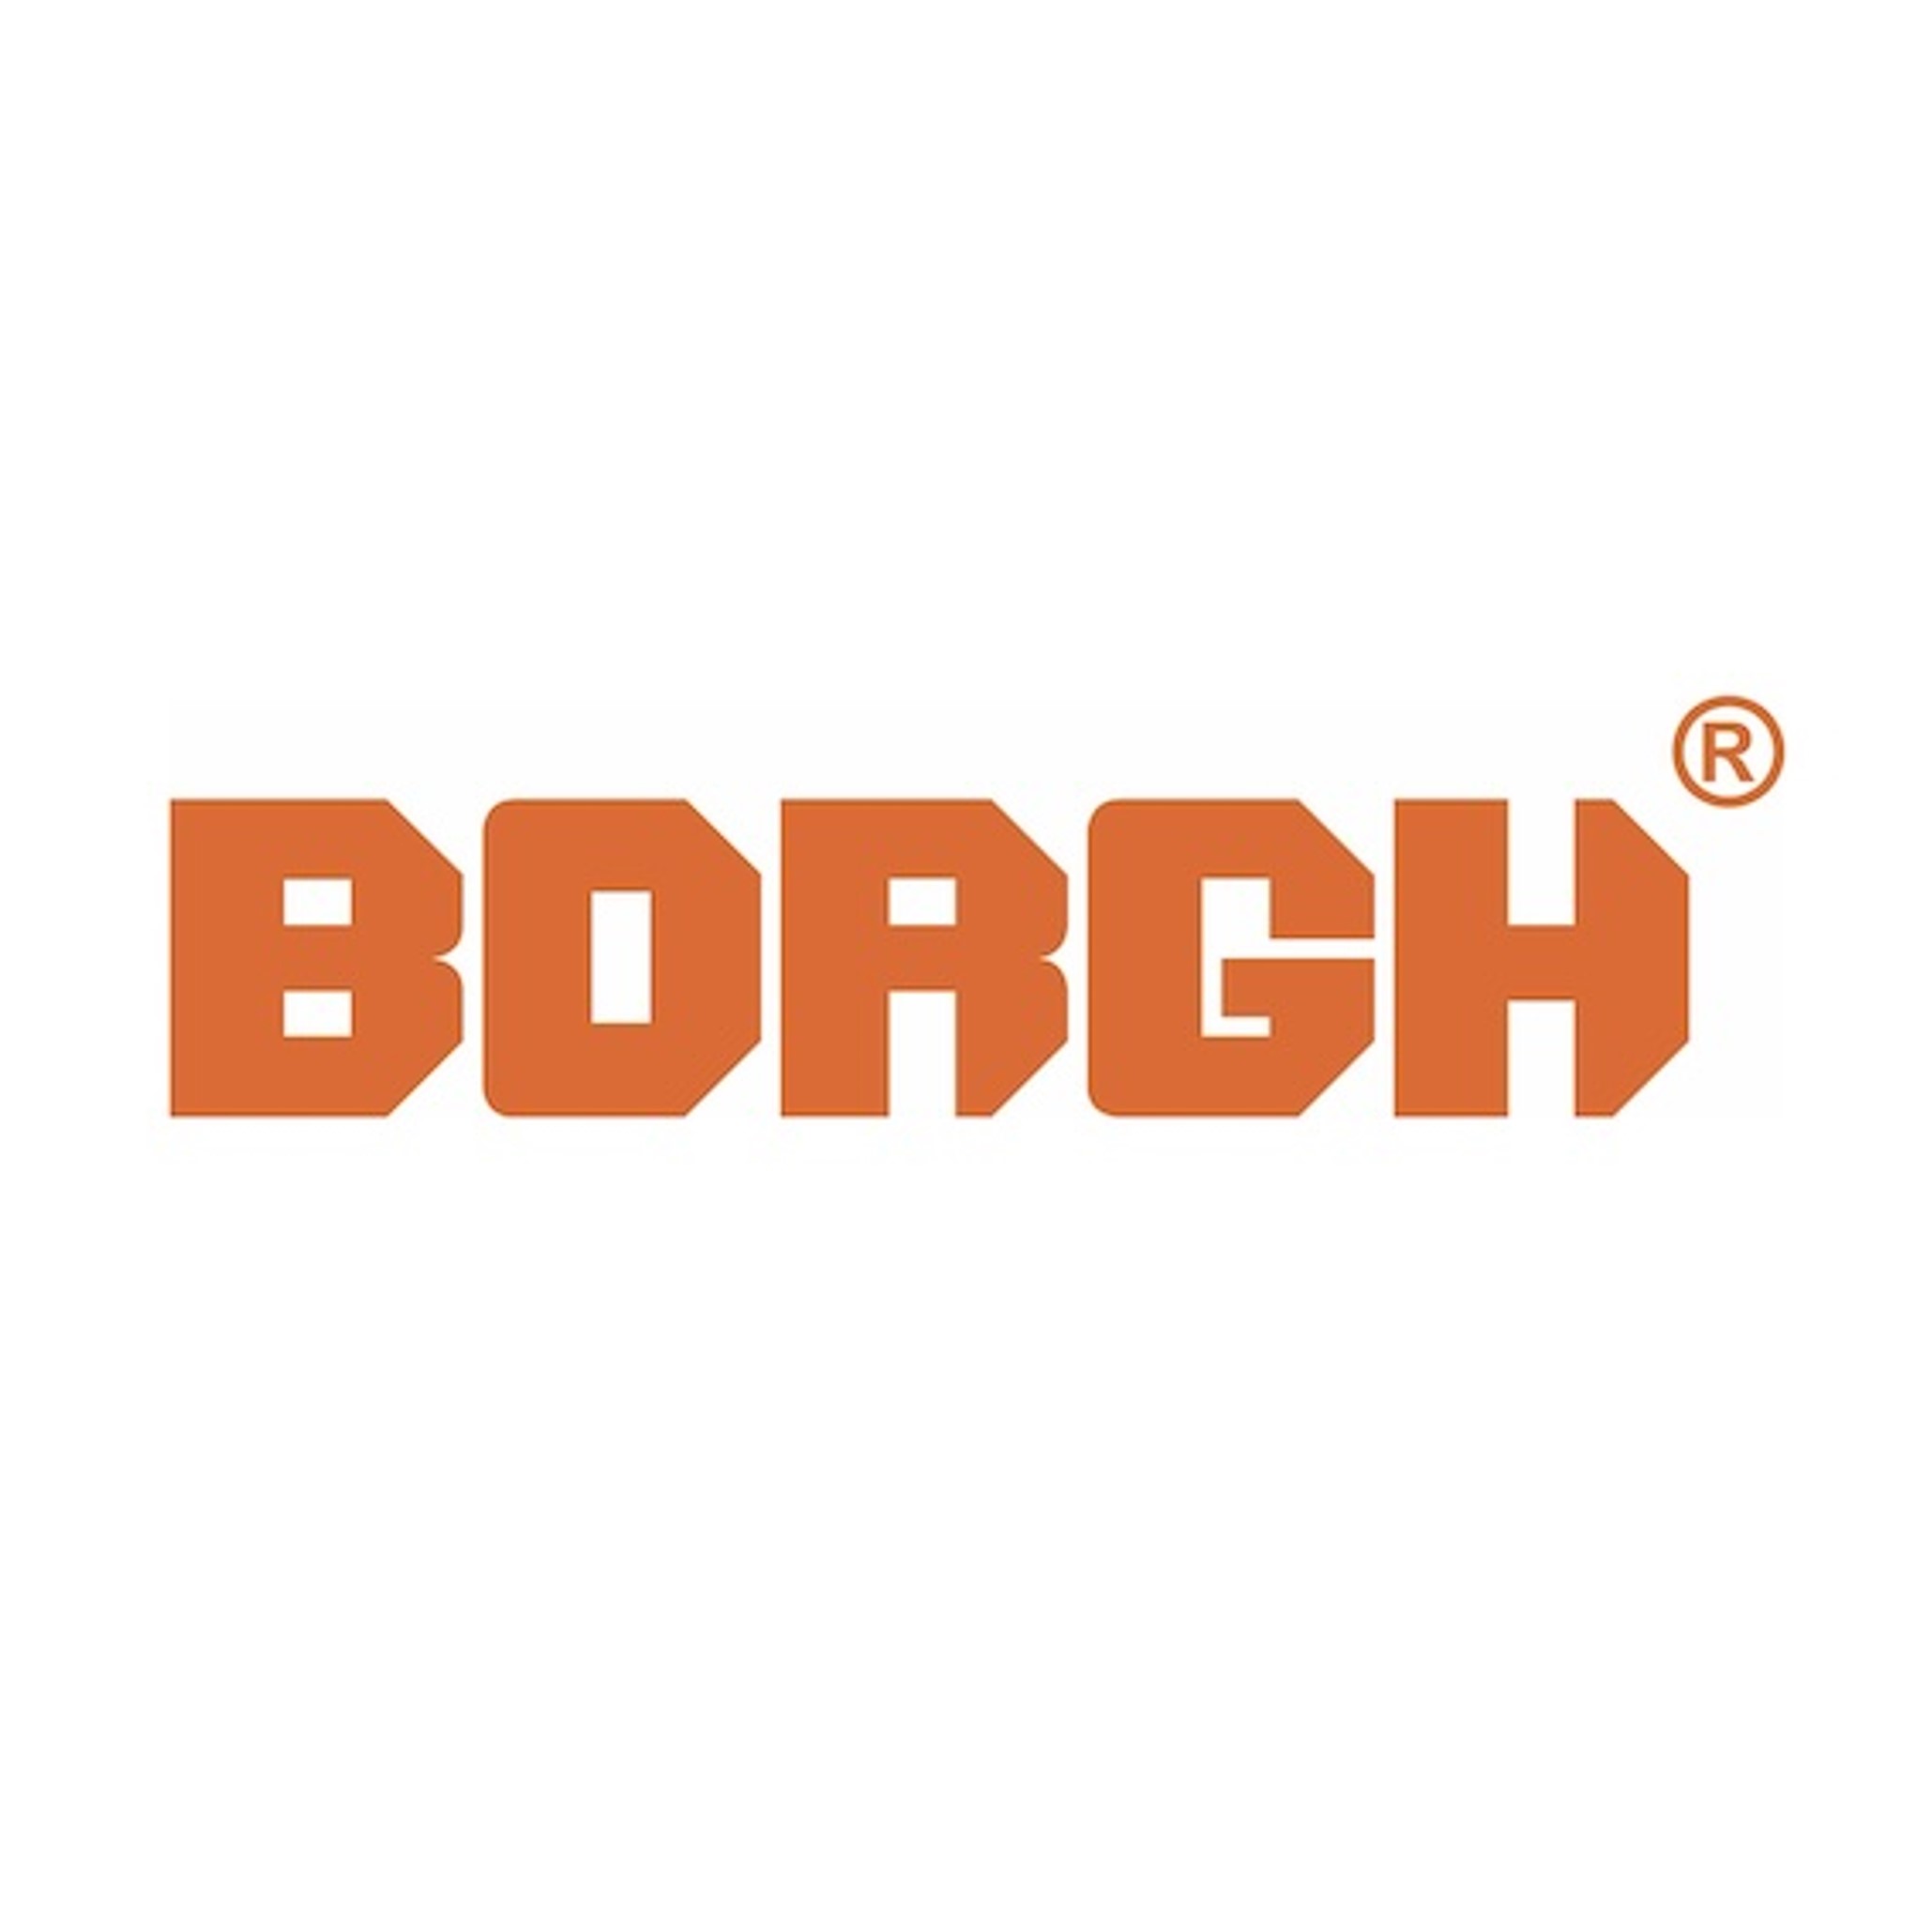 Borgh – De innovatieve bevestigingsspecialist
